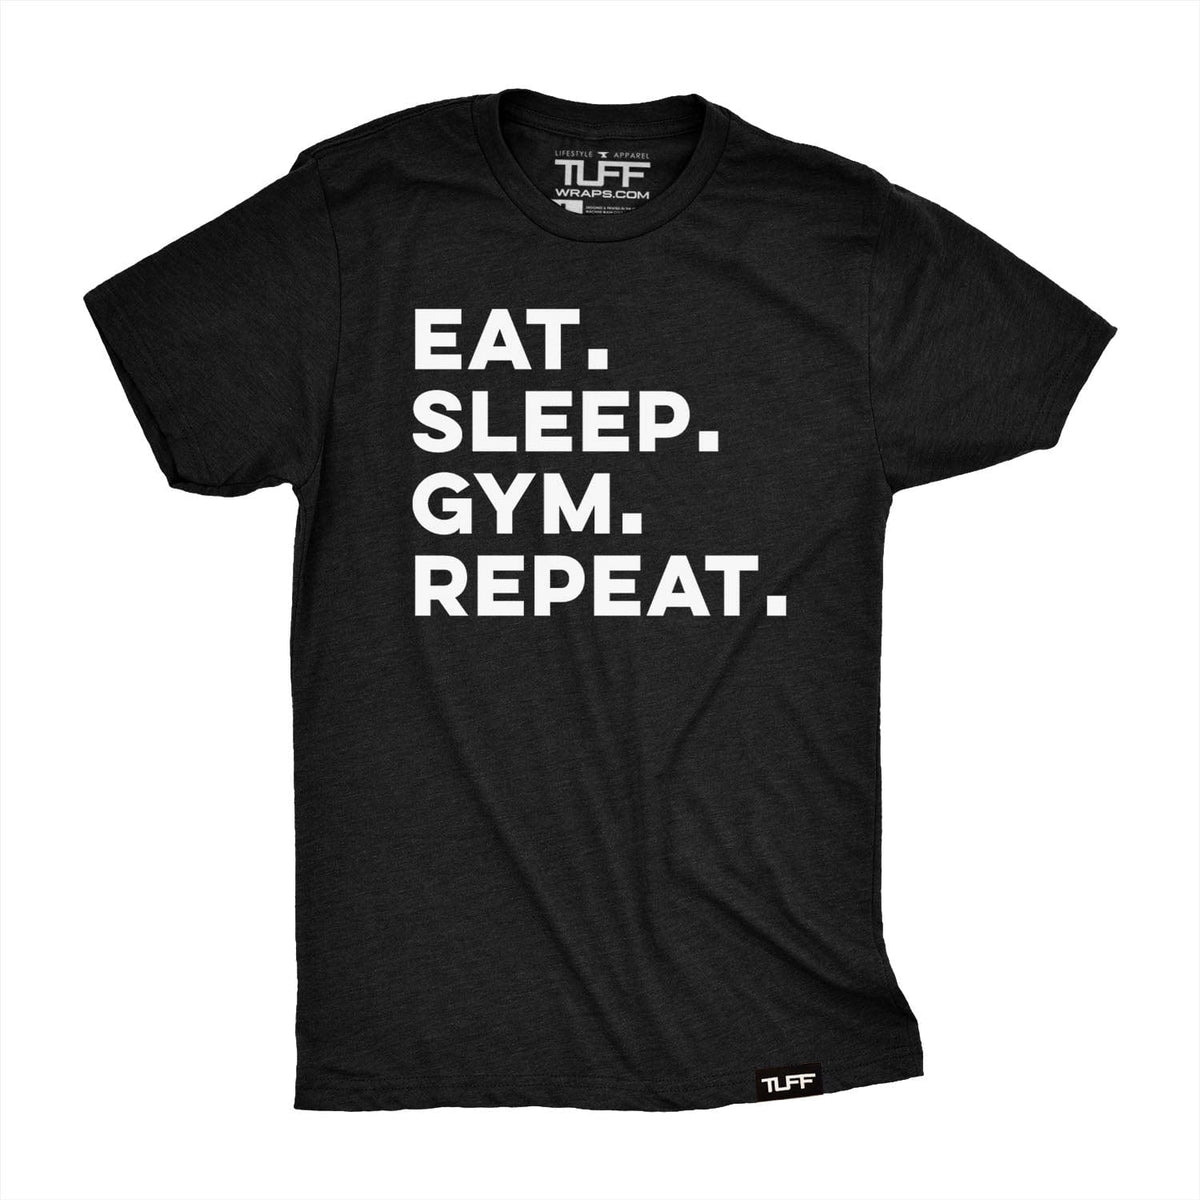 Eat. Sleep. Gym. Repeat. Tee S / Black TuffWraps.com